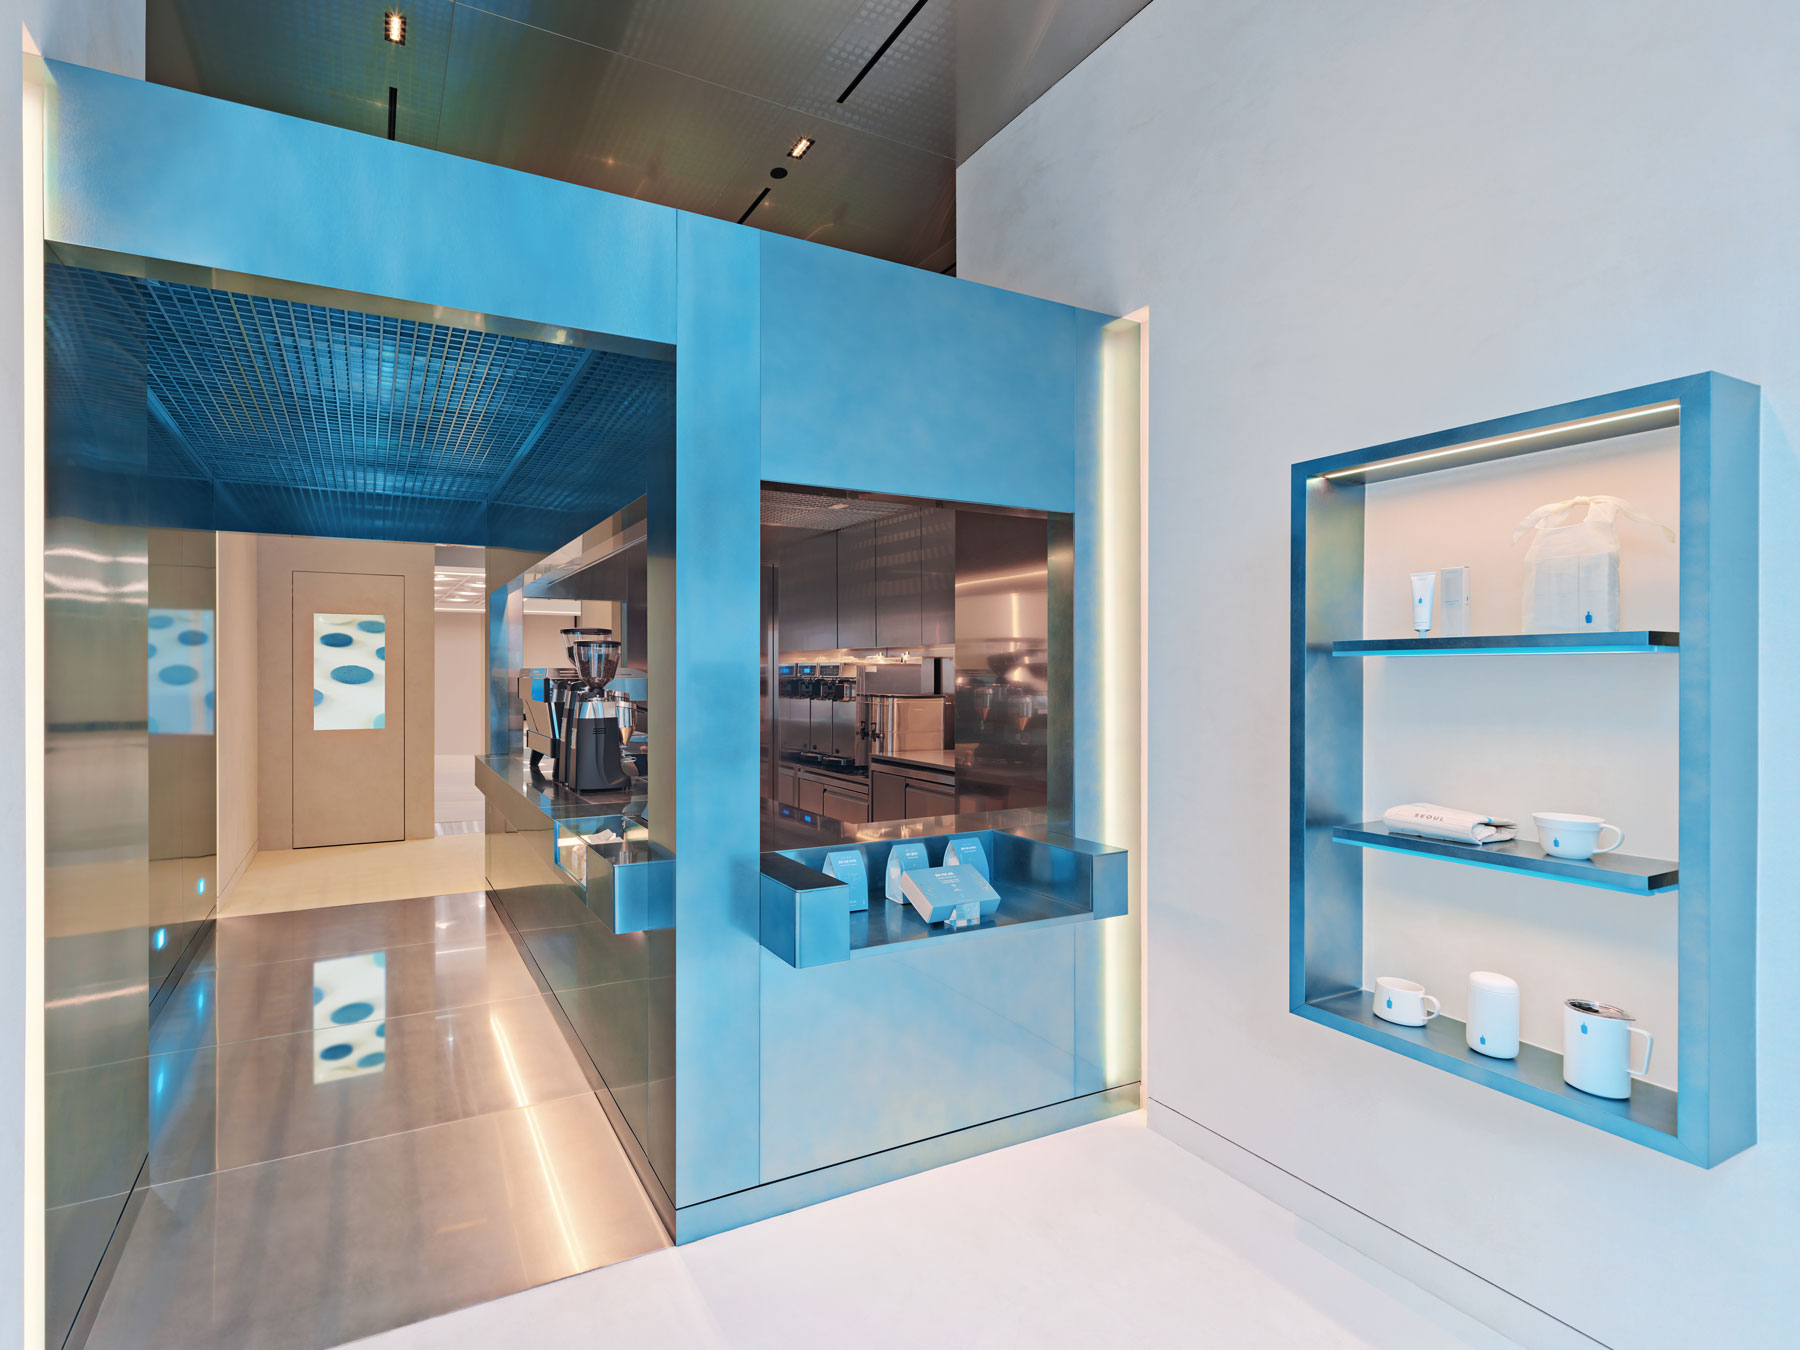 Teo Yang Studio,咖啡厅设计案例,咖啡店设计,韩国,首尔,小蓝瓶咖啡,BLUE BOTTLE COFFEE,咖啡厅设计,小蓝瓶咖啡店设计案例,网红咖啡厅,创意咖啡店